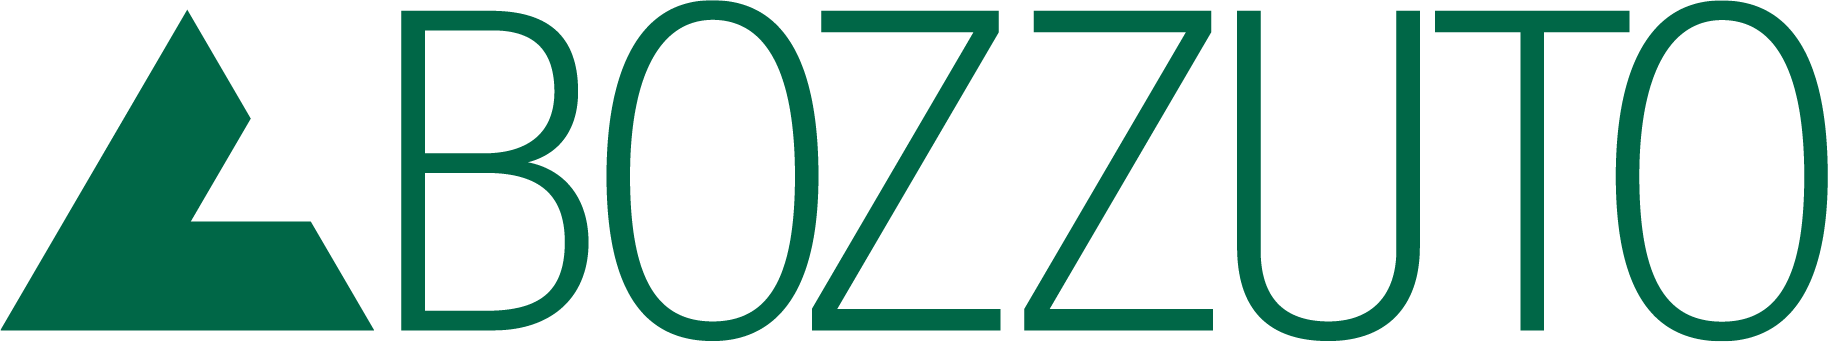 Bozzuto_Primary_Logo_Green_RGB_ForScreen